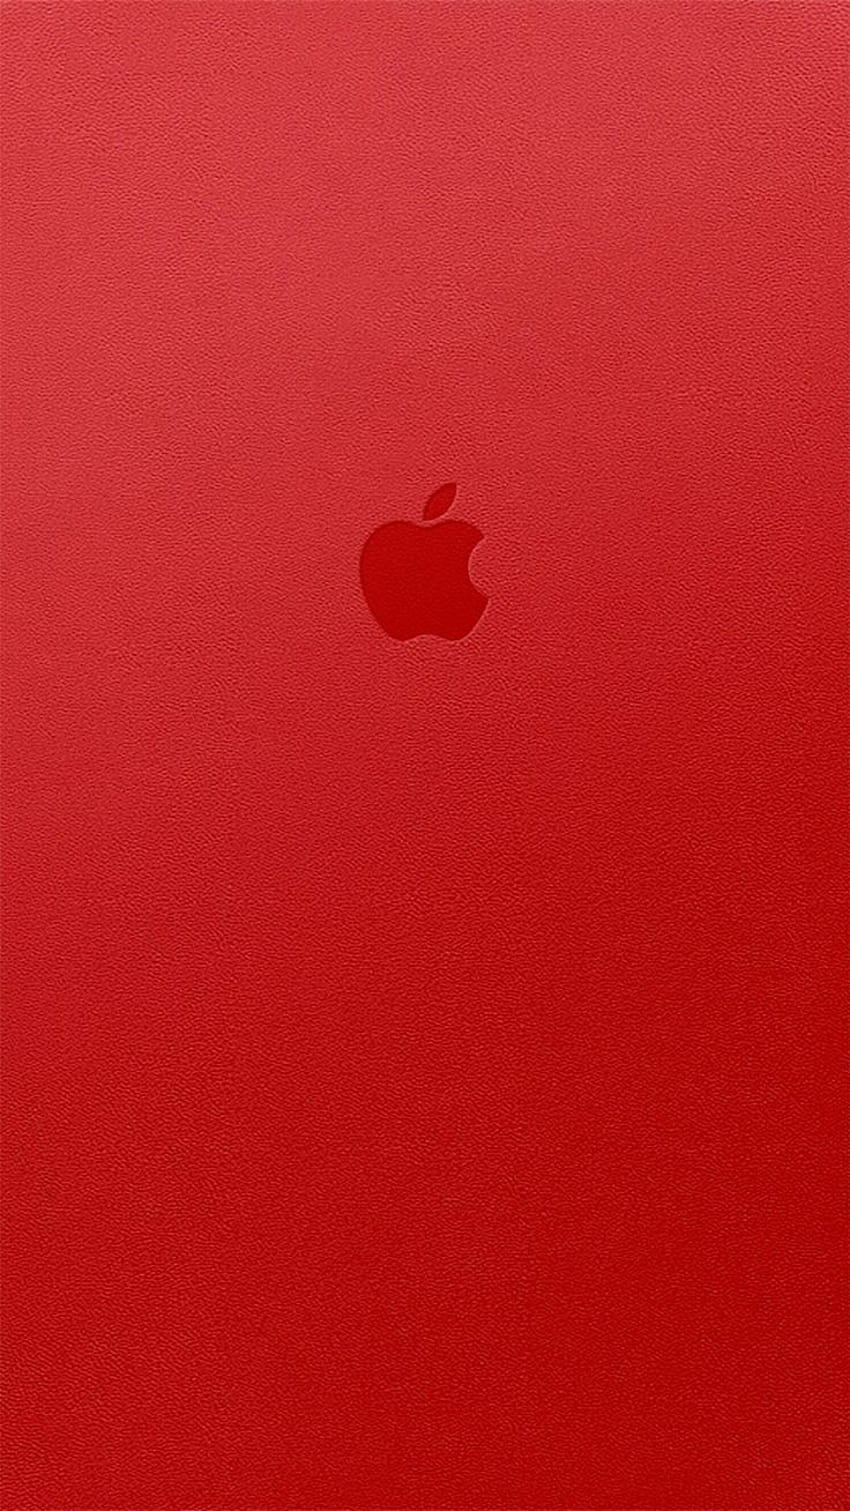 Apple iPhone 6s Plus 赤、赤 Apple ロゴ 6 HD電話の壁紙